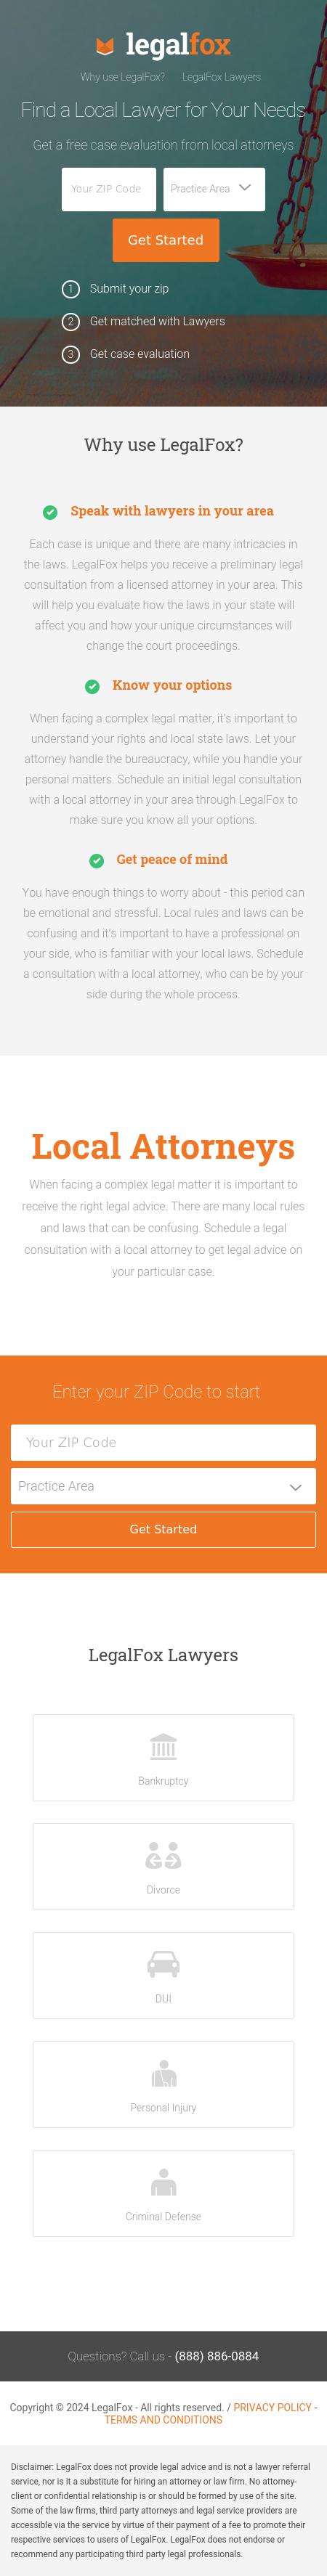 Find a Local Attorney - Wichita KS Lawyers